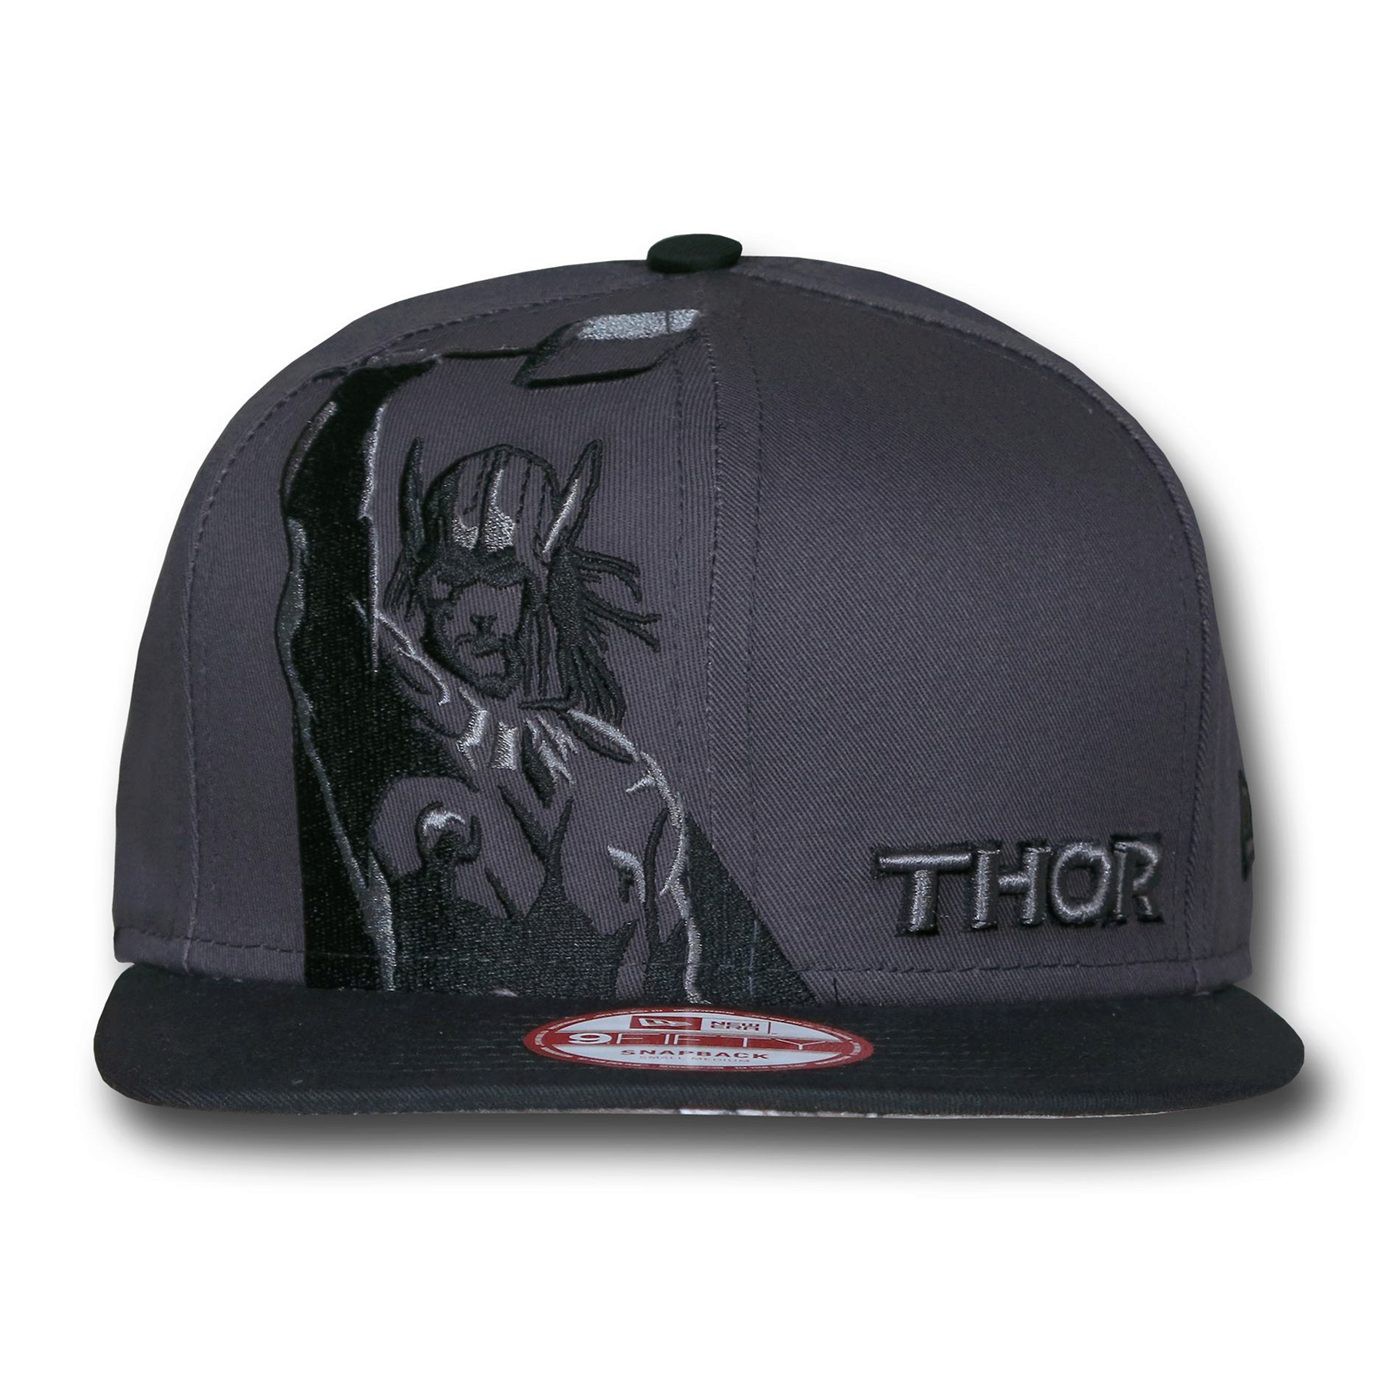 Thor Image Grey Black 9Fifty Snapback Cap